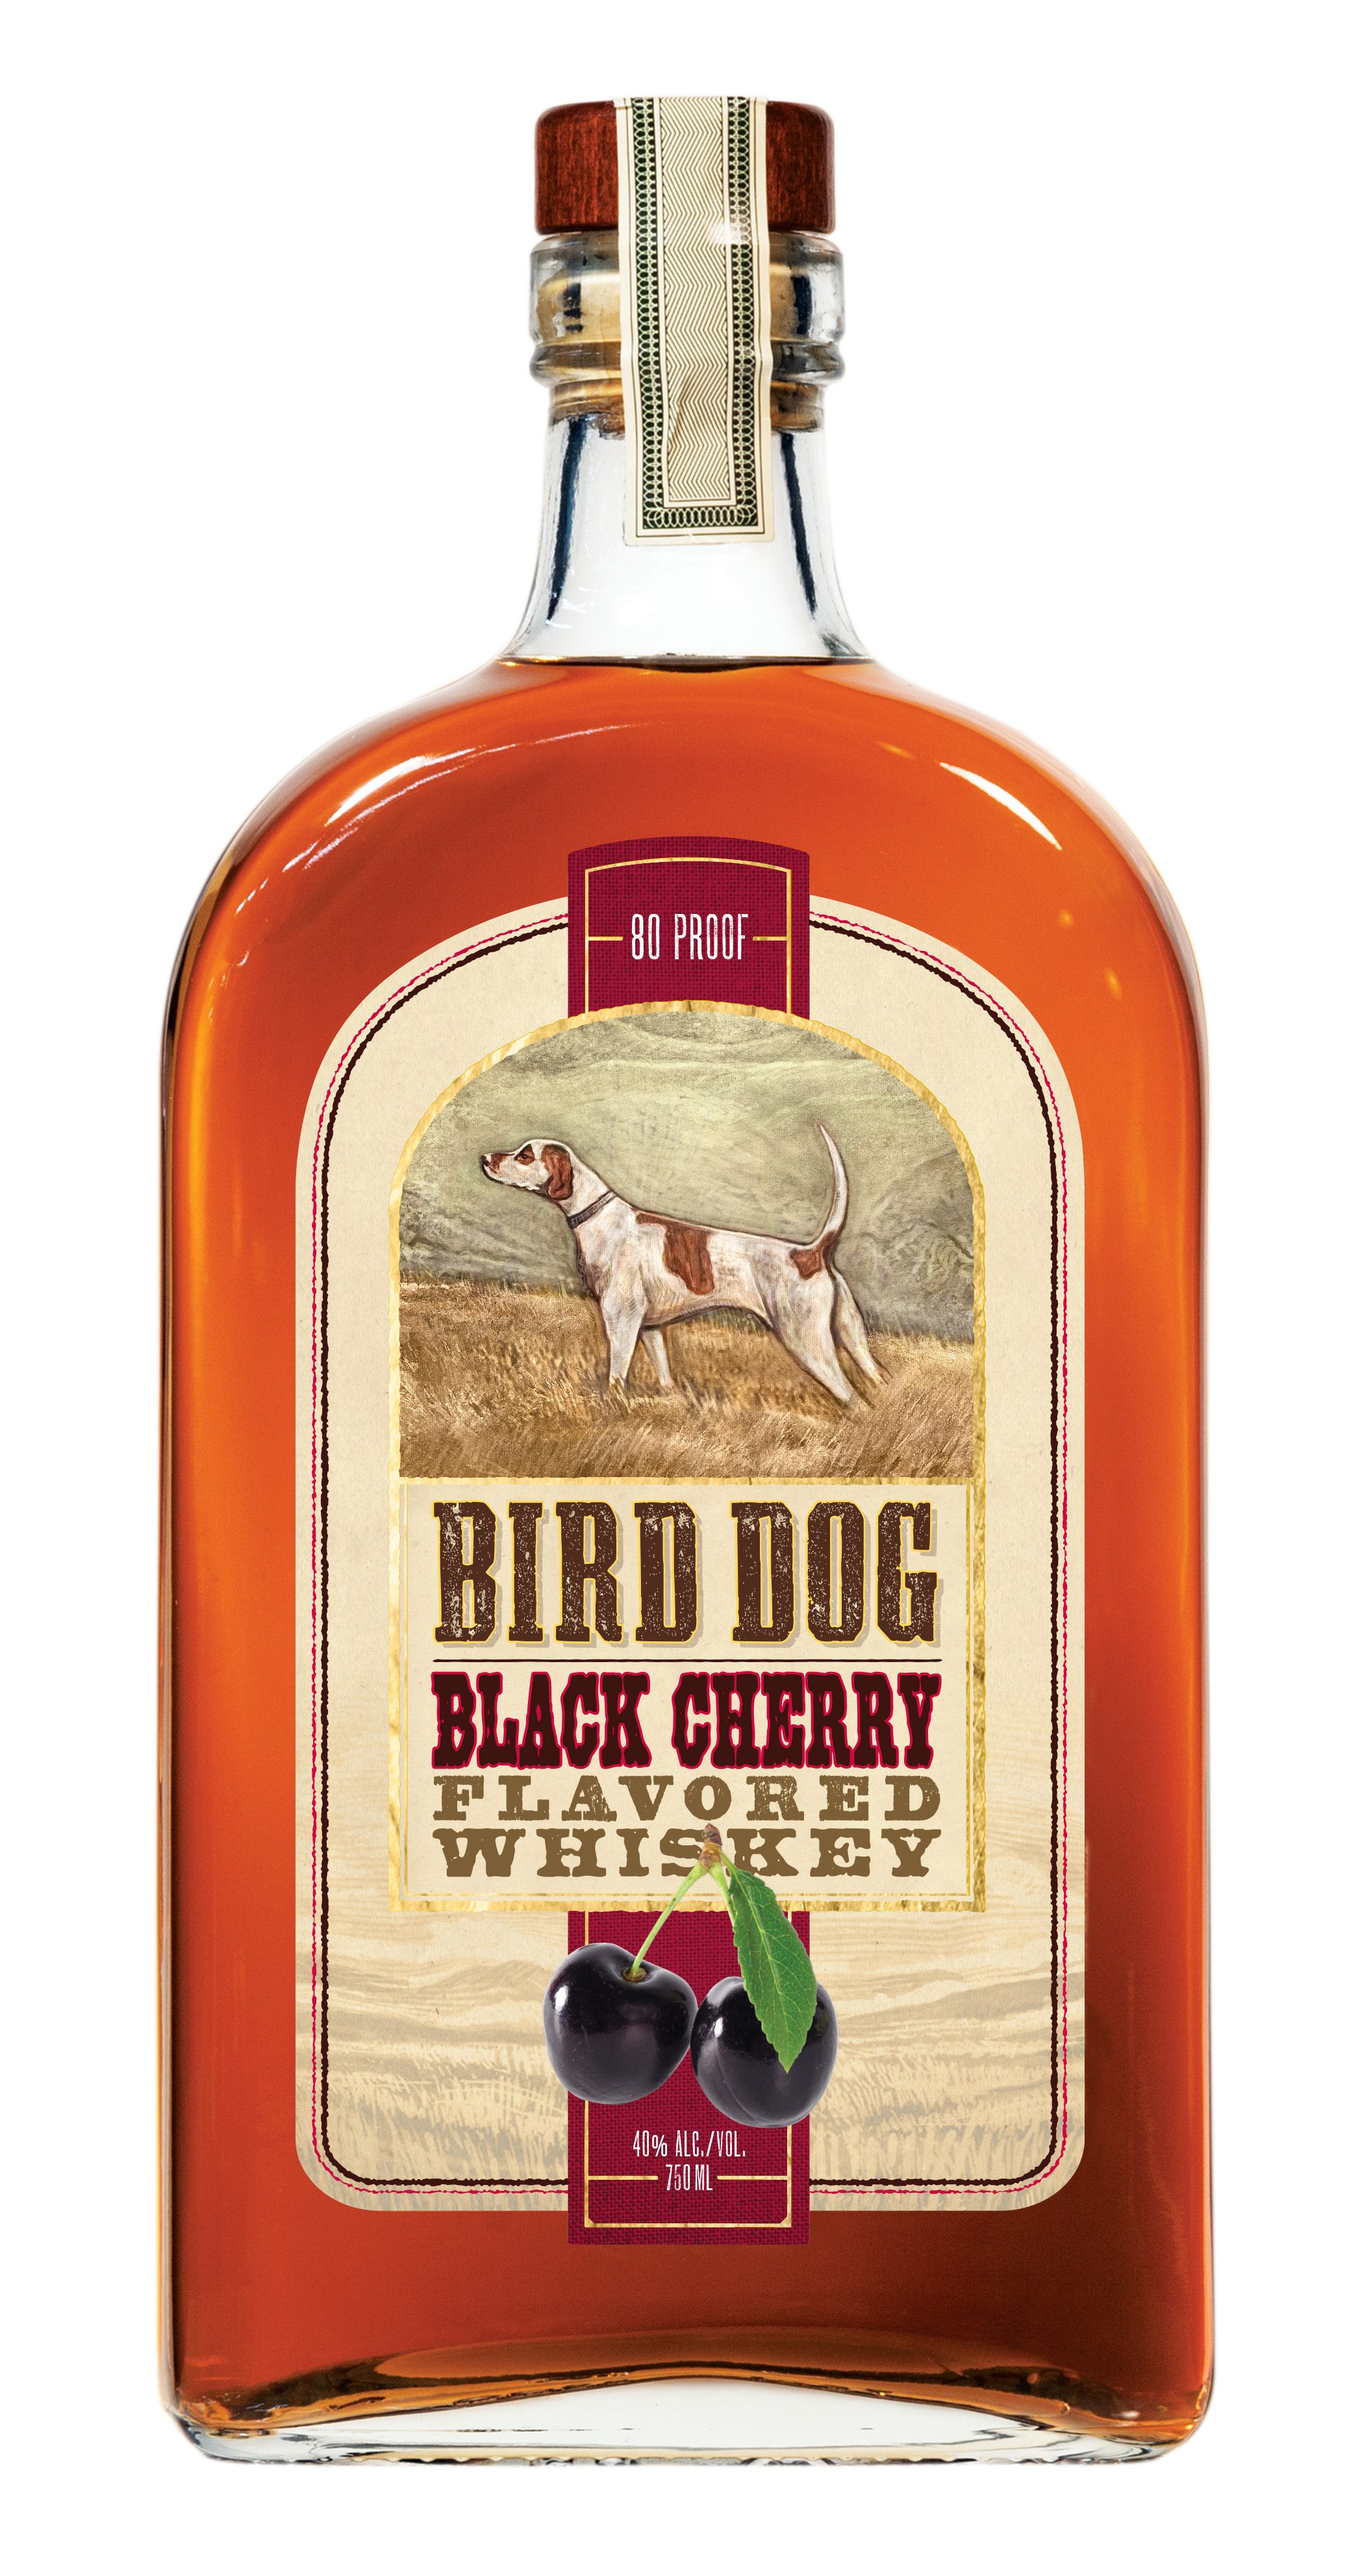 Bird Dog Whiskey Launches an AwardWinning Black Cherry